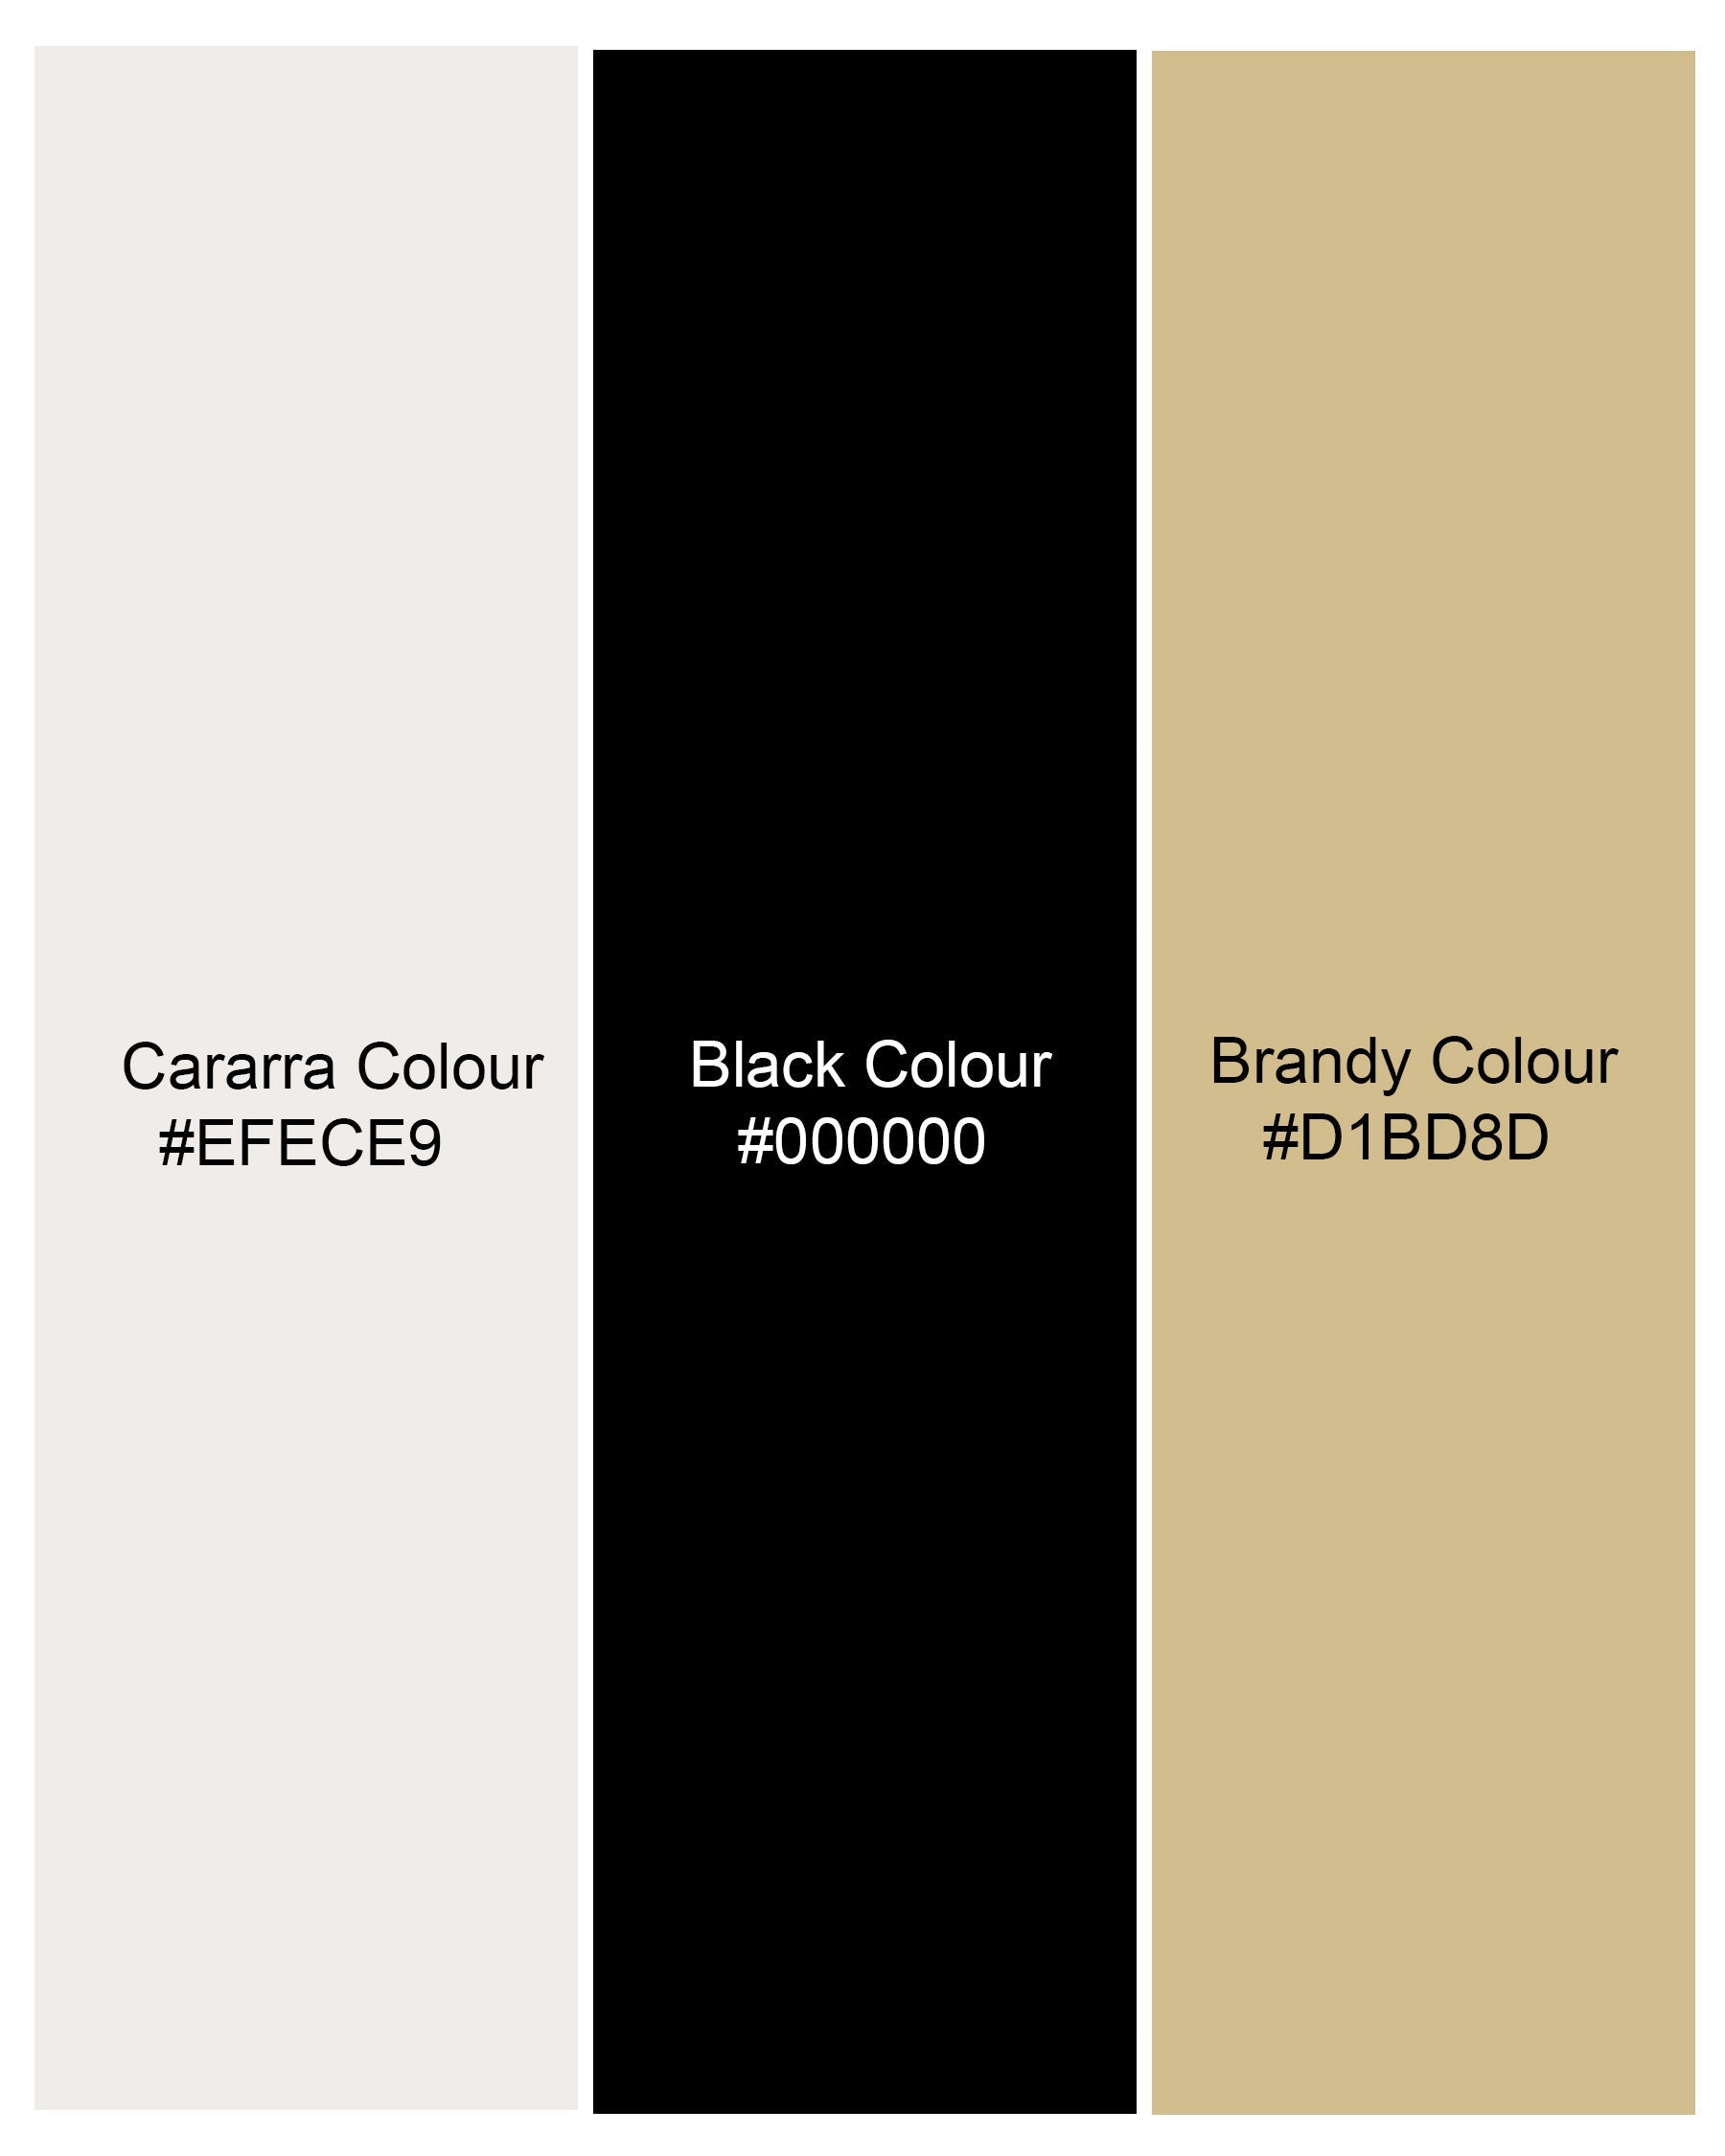 Cararra Cream with Brandy Brown and Black Leopard Striped Printed Premium Cotton Shirt        8364-CC-H-38,8364-CC-H-39,8364-CC-H-40,8364-CC-H-42,8364-CC-H-44,8364-CC-H-46,8364-CC-H-48,8364-CC-H-50, 8364-CC-H-52